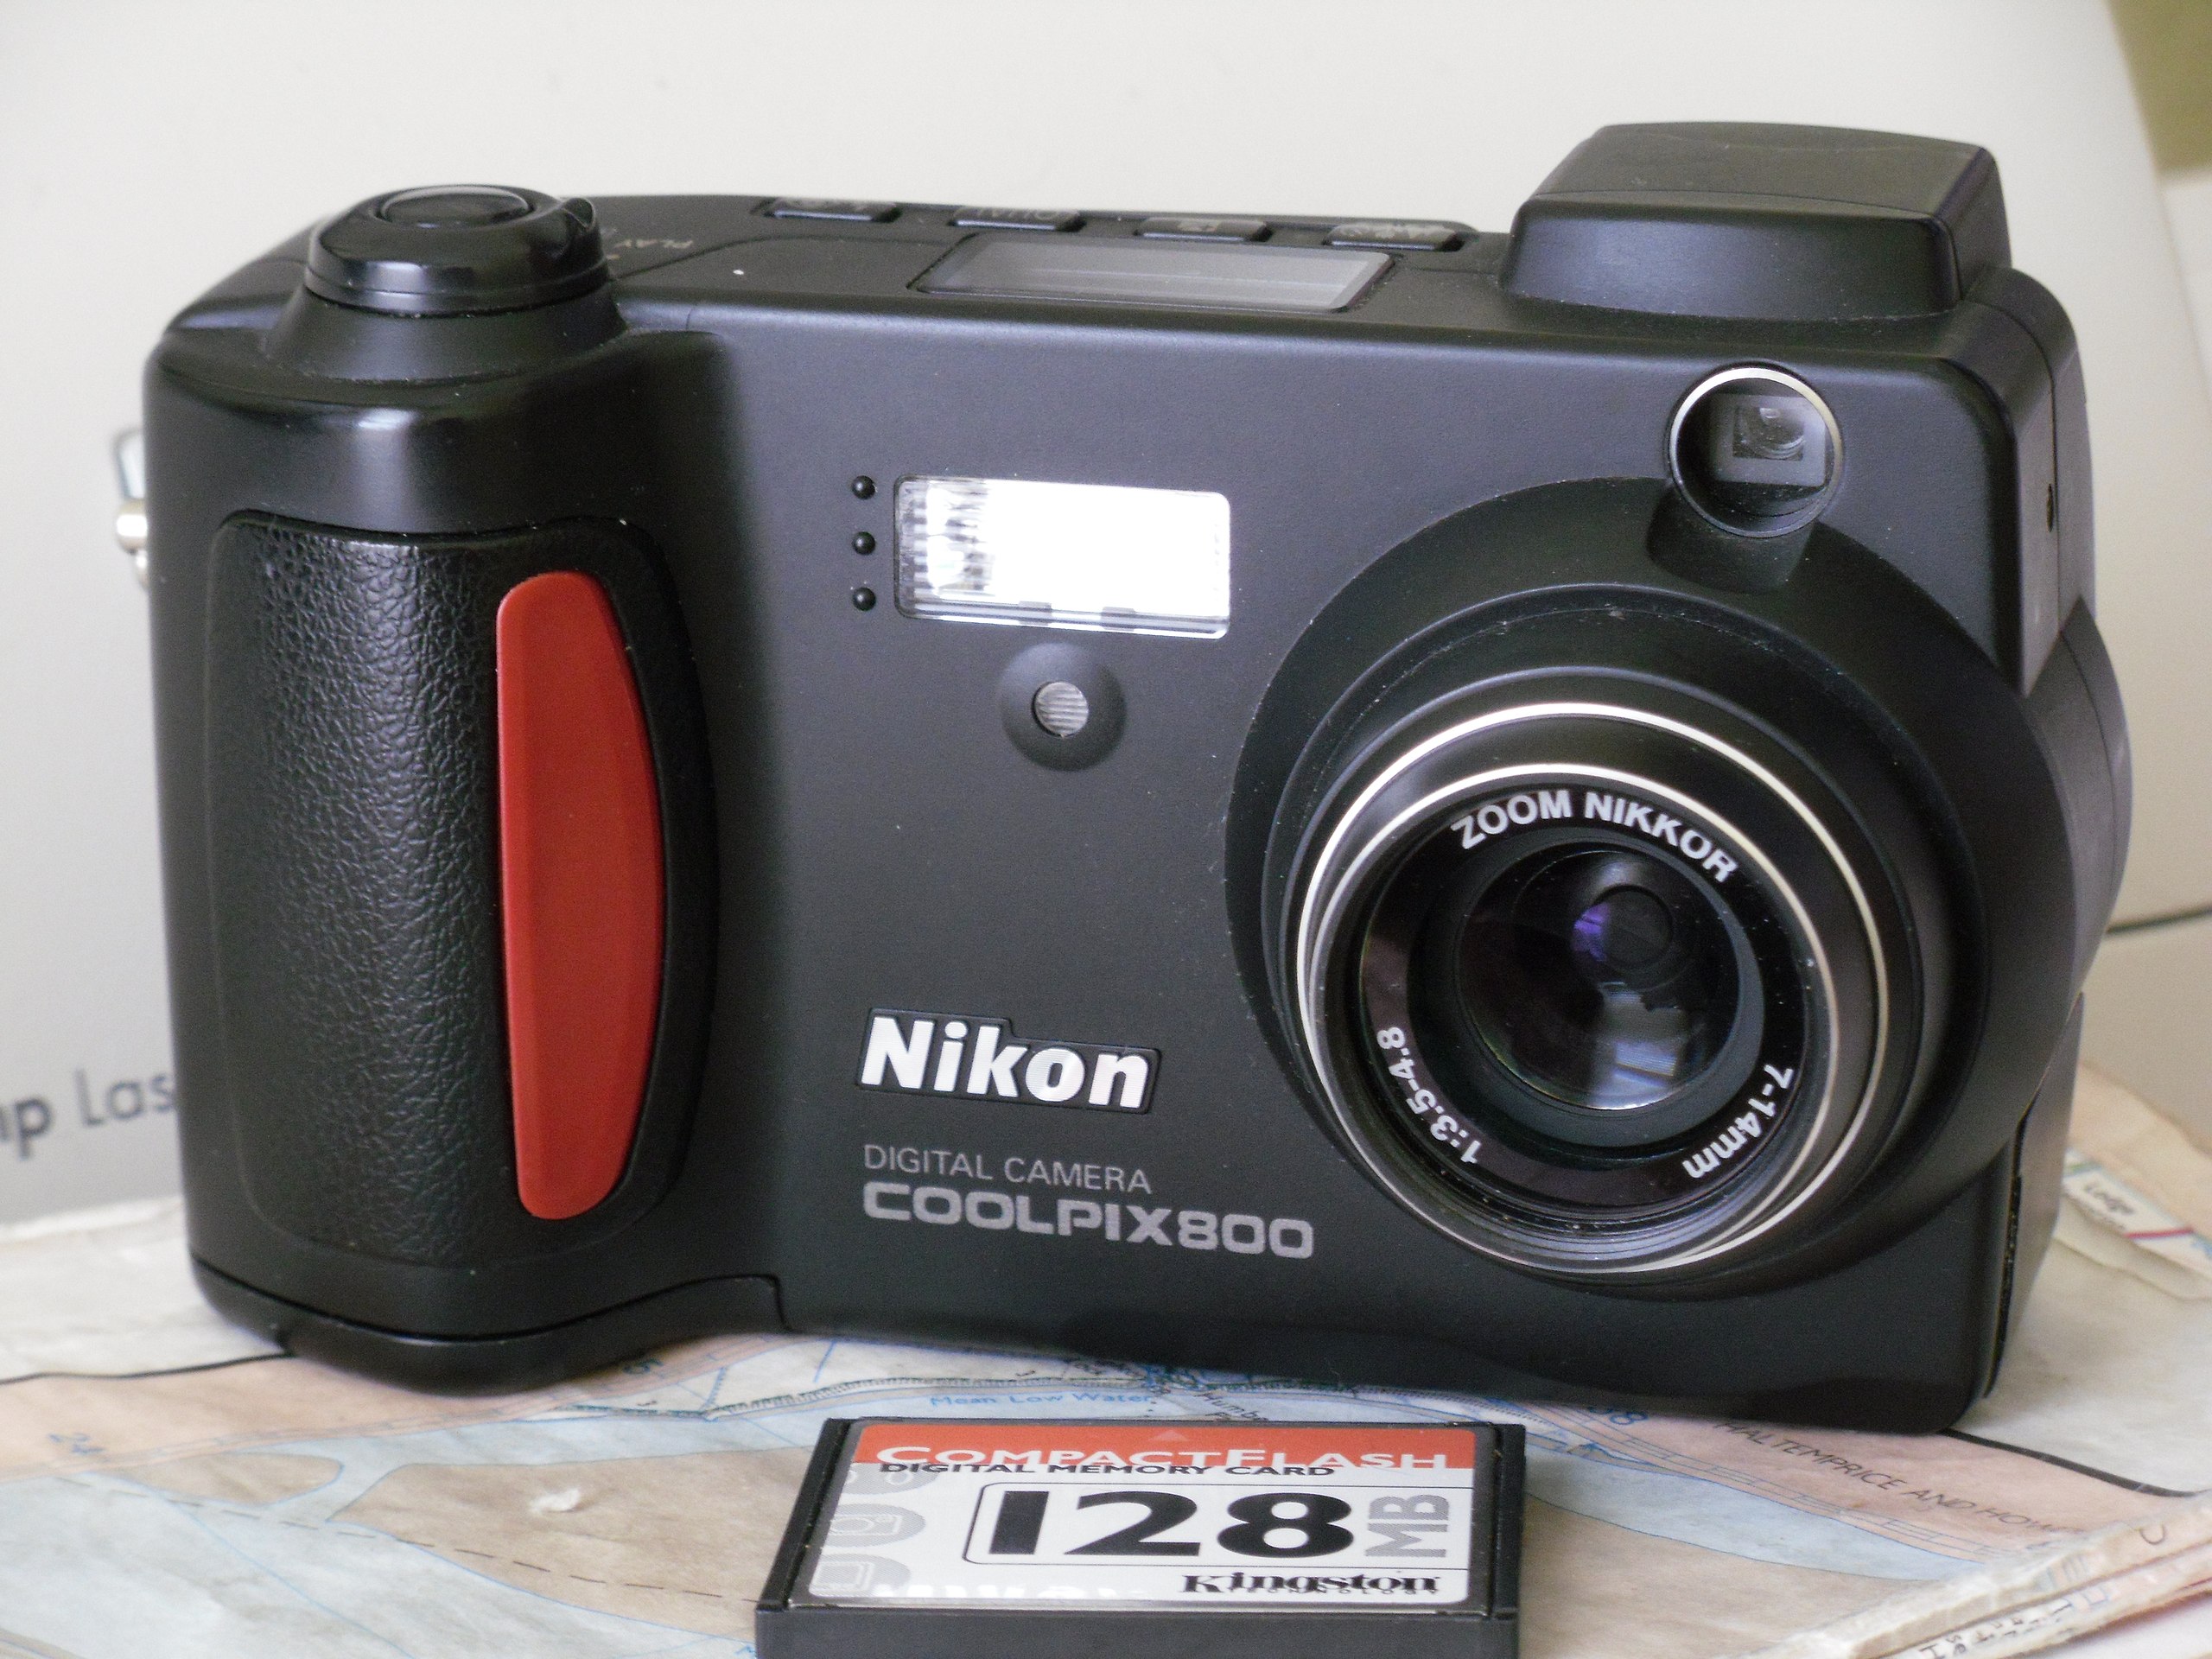 File:Nikon Coolpix 800 (4519837731).jpg - Wikipedia